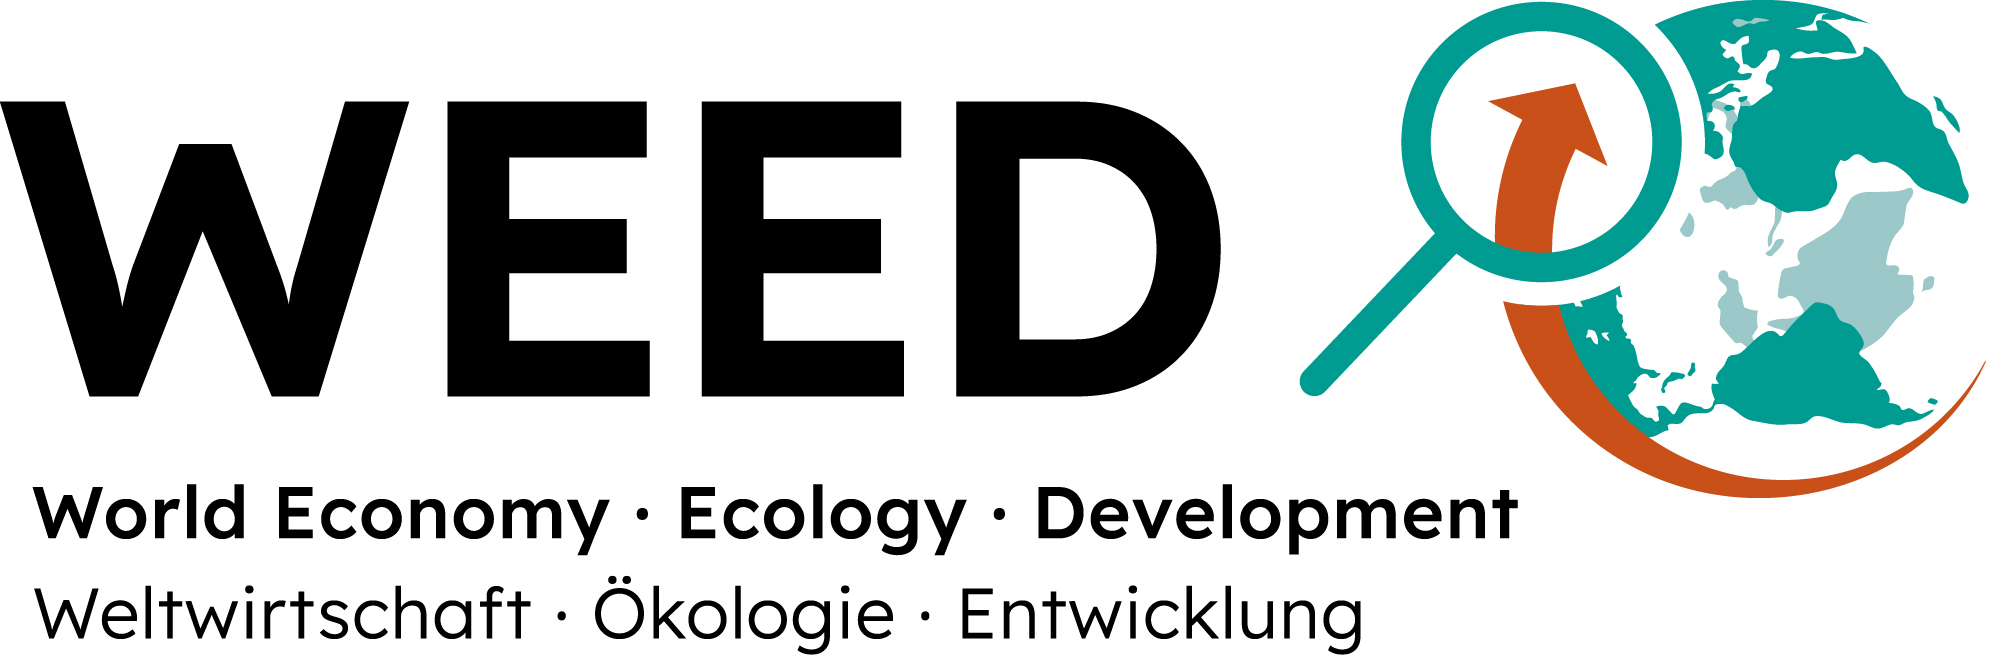 WEED-Logo_UT_RGB_farb_pos